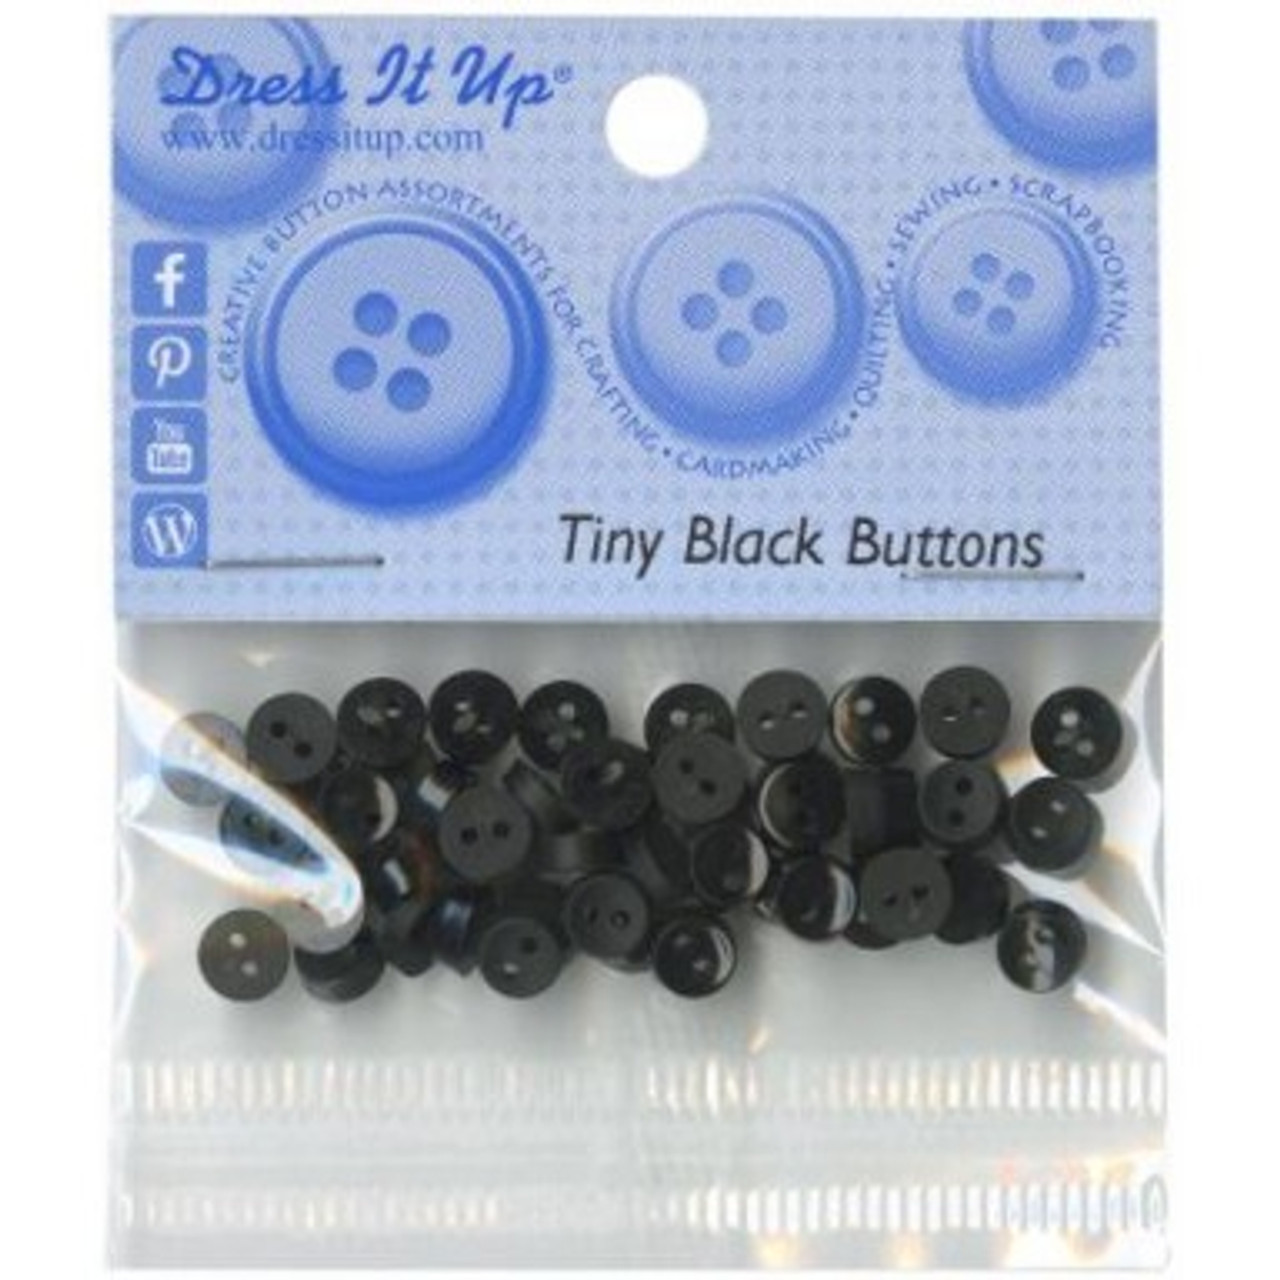 Tiny Black Buttons